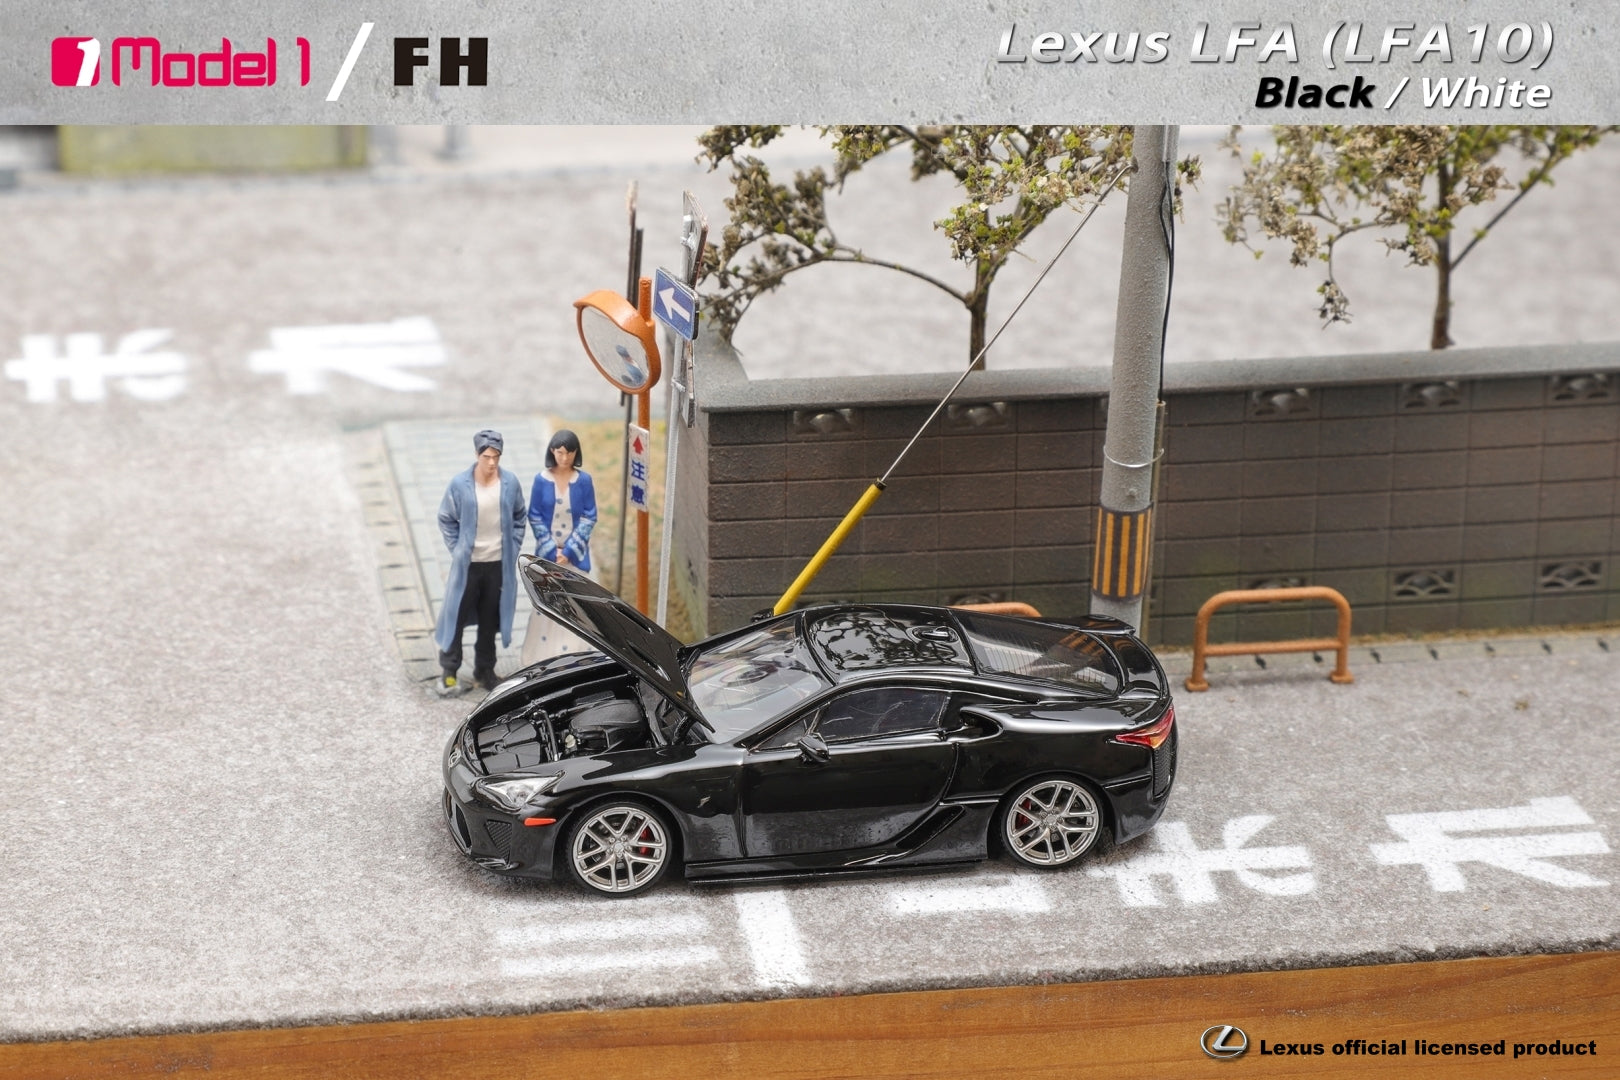 Focal Horizon 1/64 Lexus LFA Black